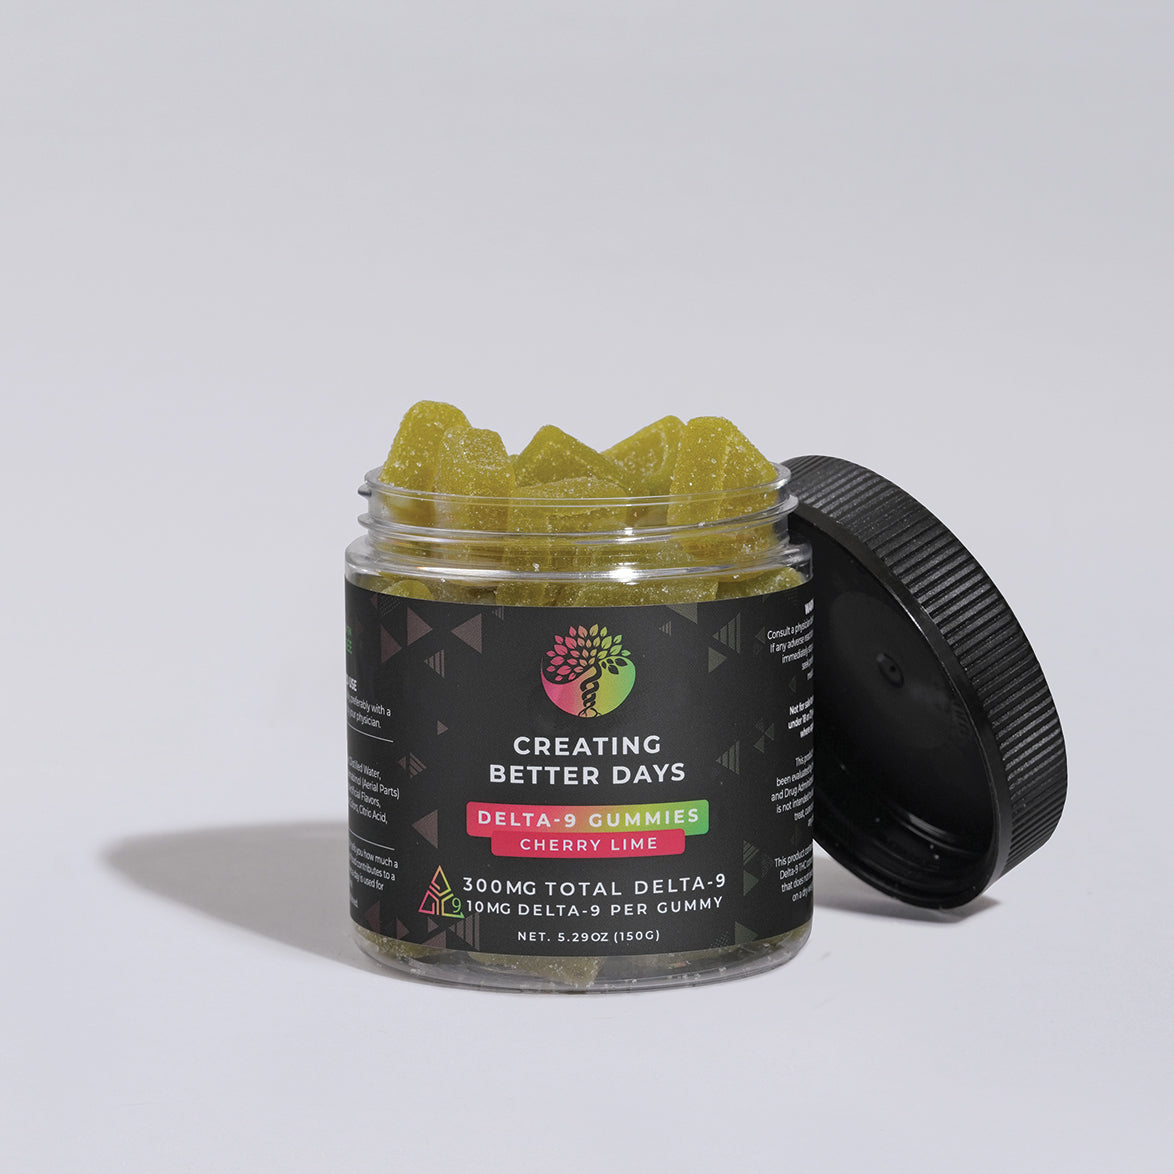 300mg Delta-9 Cherry Lime Gummies - Fat-Free & Vegan | Creating Better Days